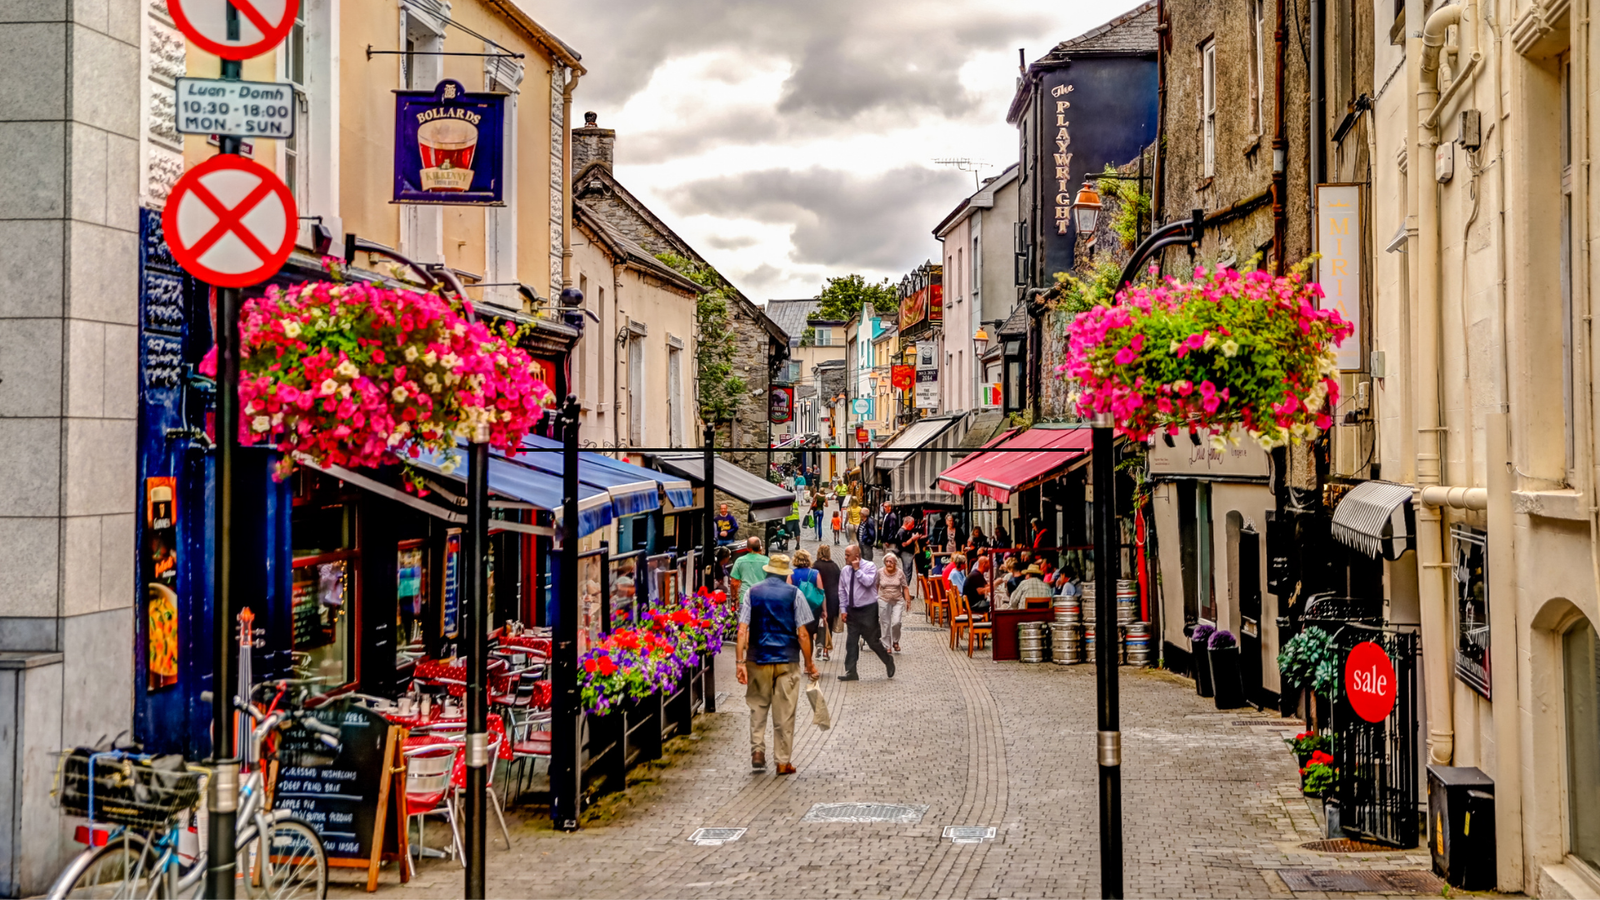 9 BEST Things To Do In Kilkenny in 2023